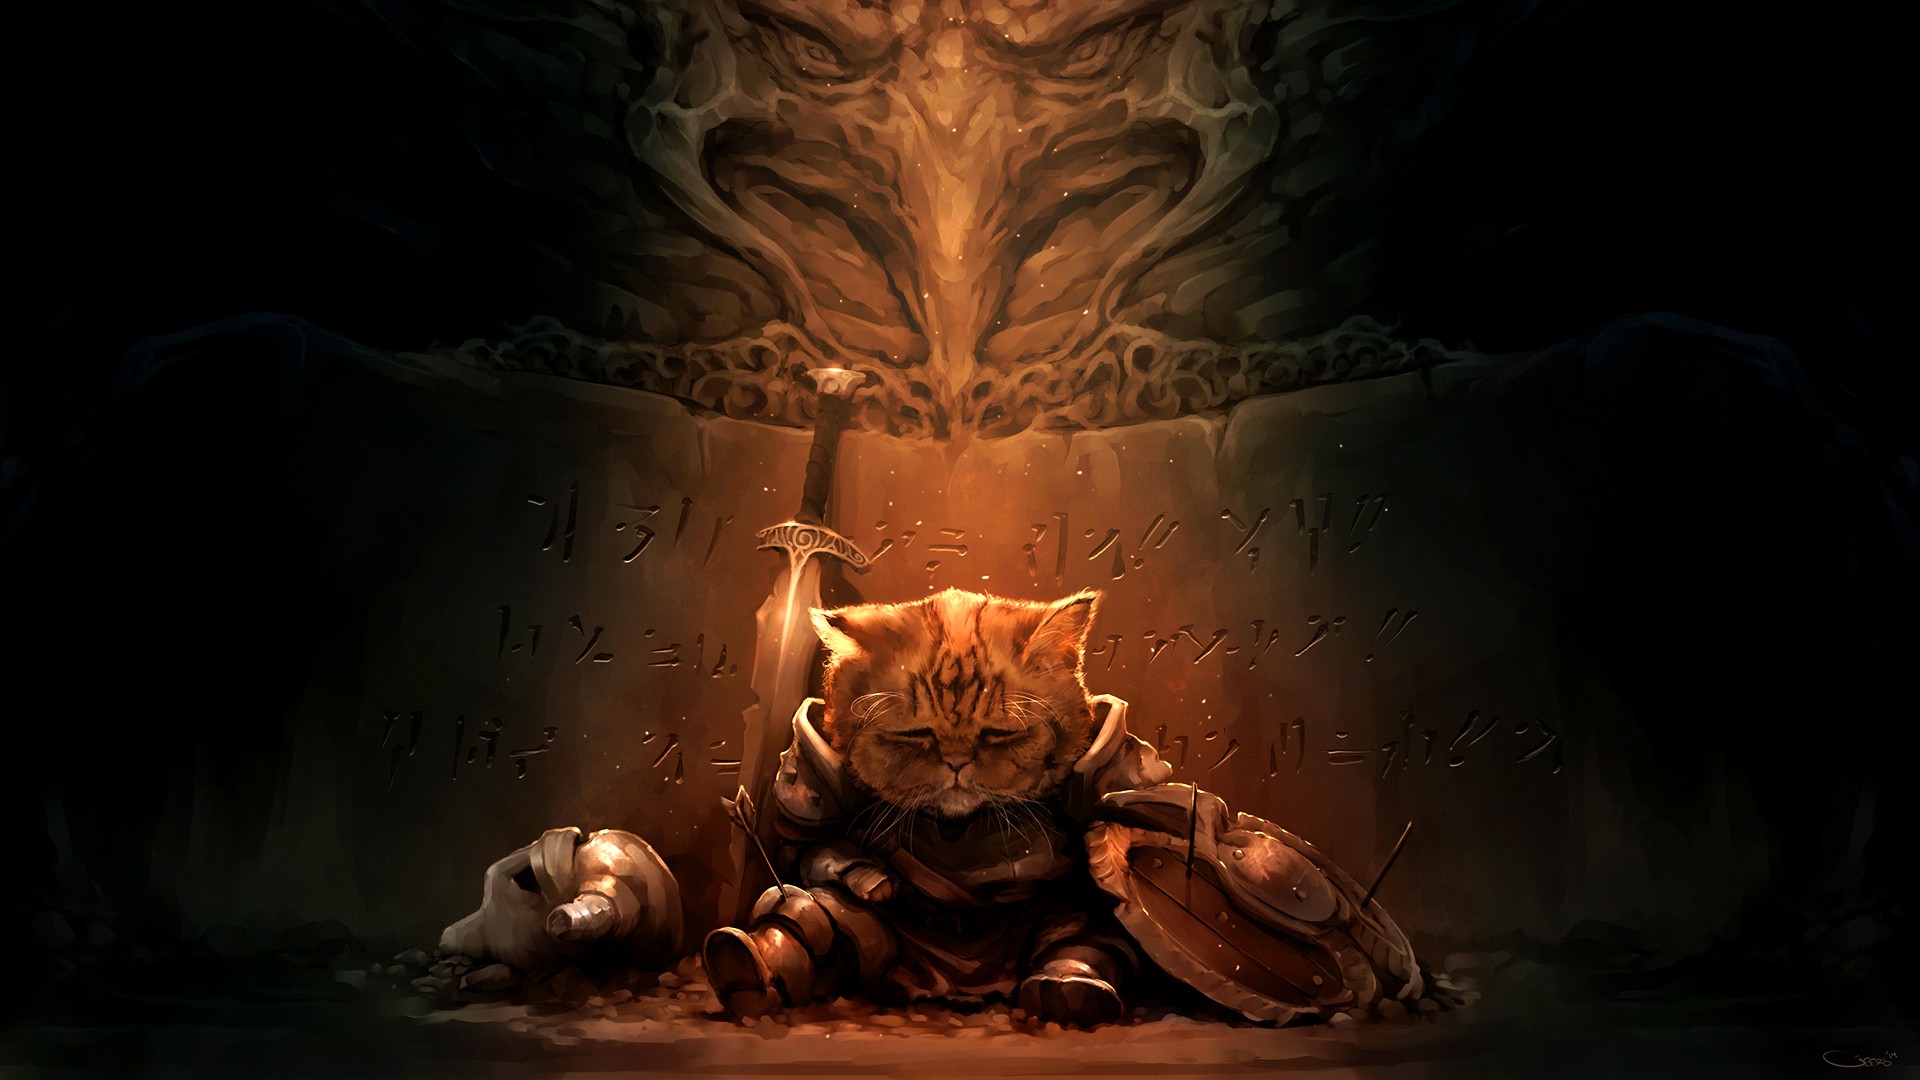 General 1920x1080 cats The Elder Scrolls V: Skyrim Khajiit Lirik video games GeersArt PC gaming fantasy art DeviantArt